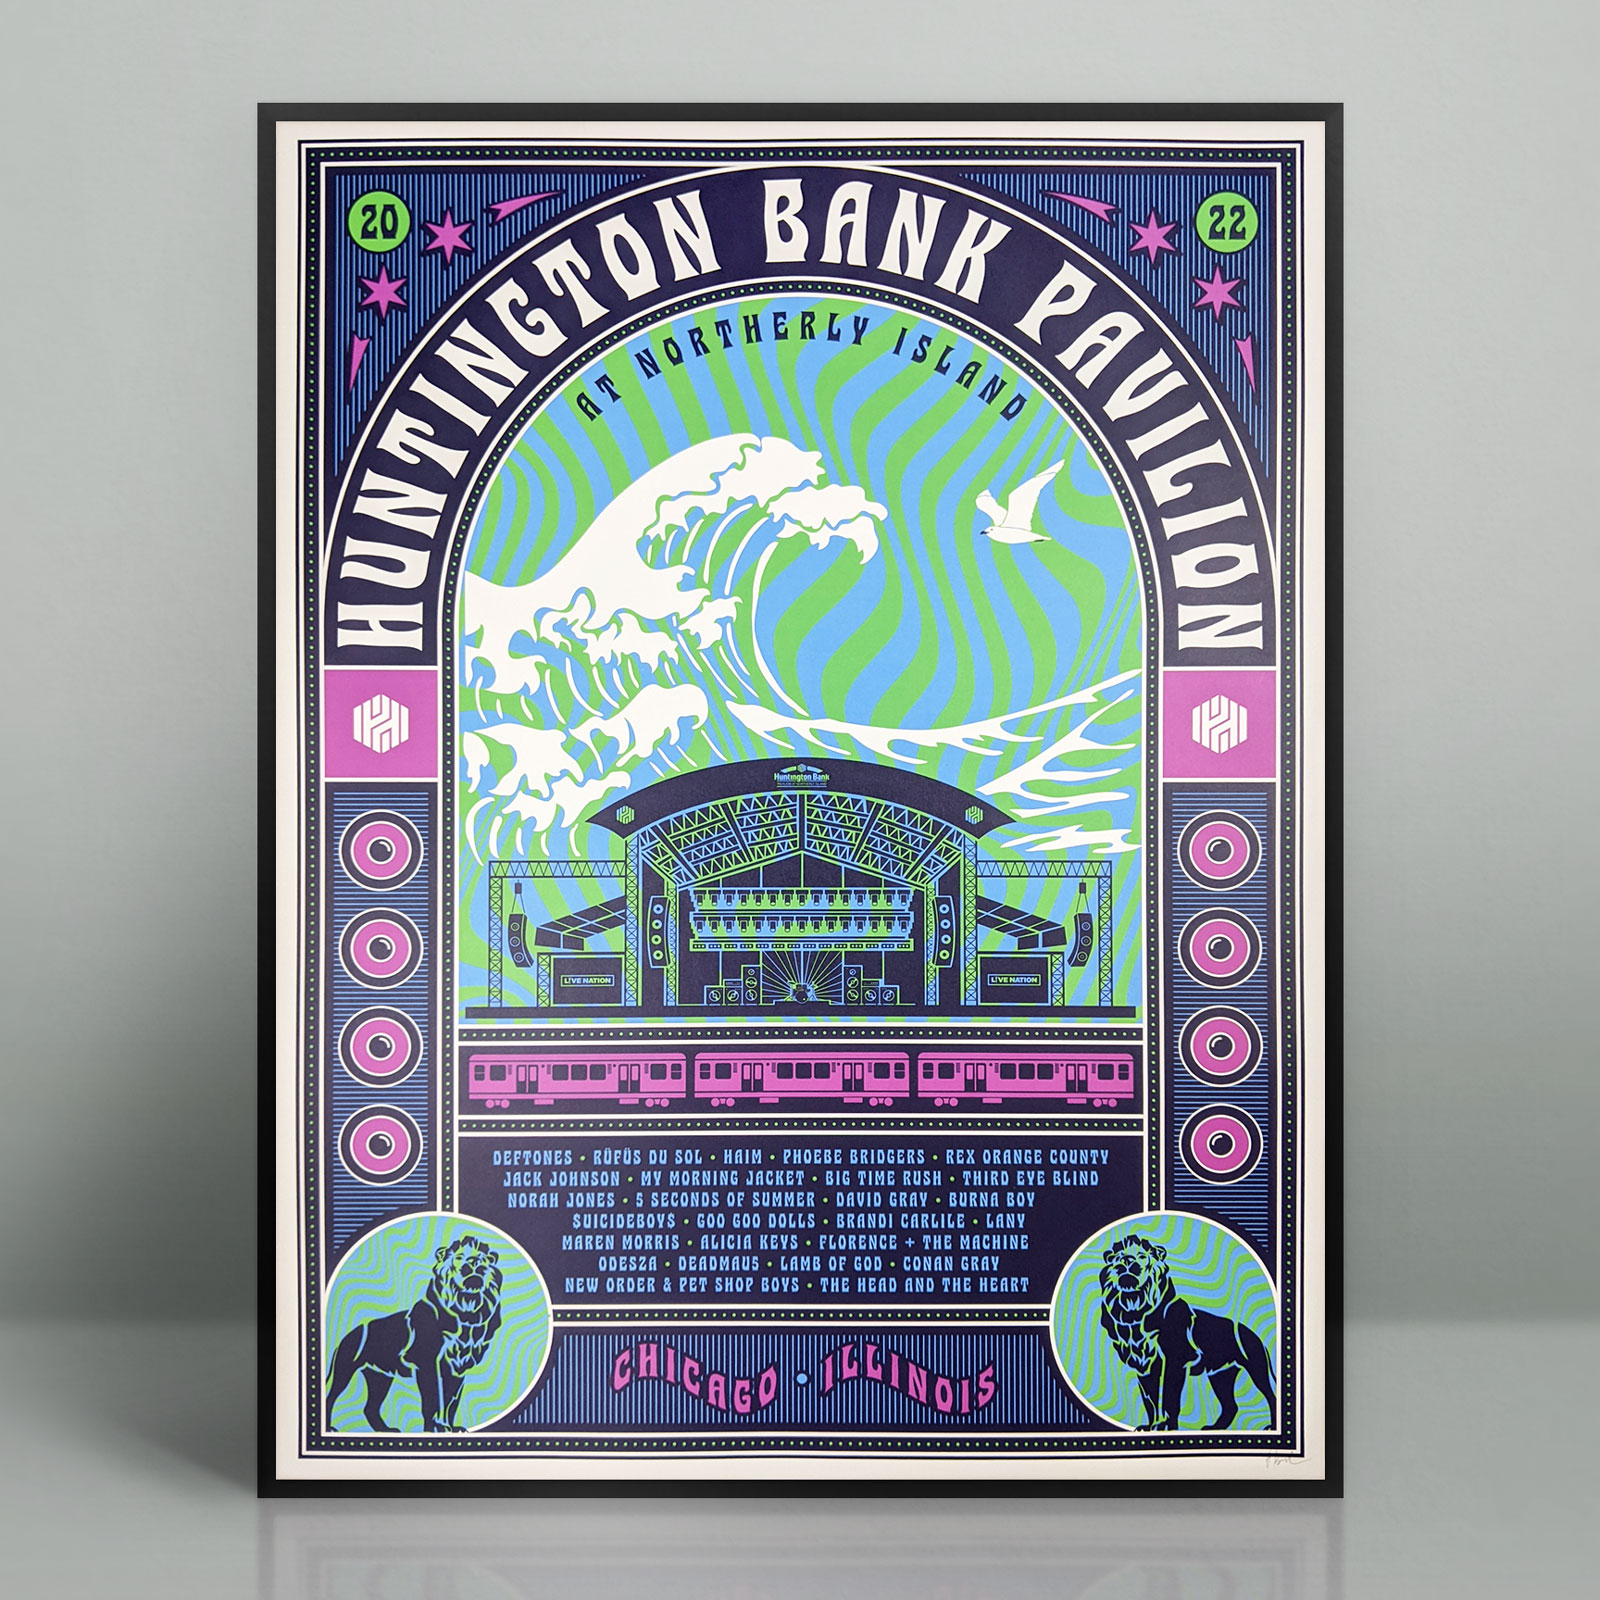 Huntington Bank Pavilion at Northerly Island 2022 Concert Series Poster